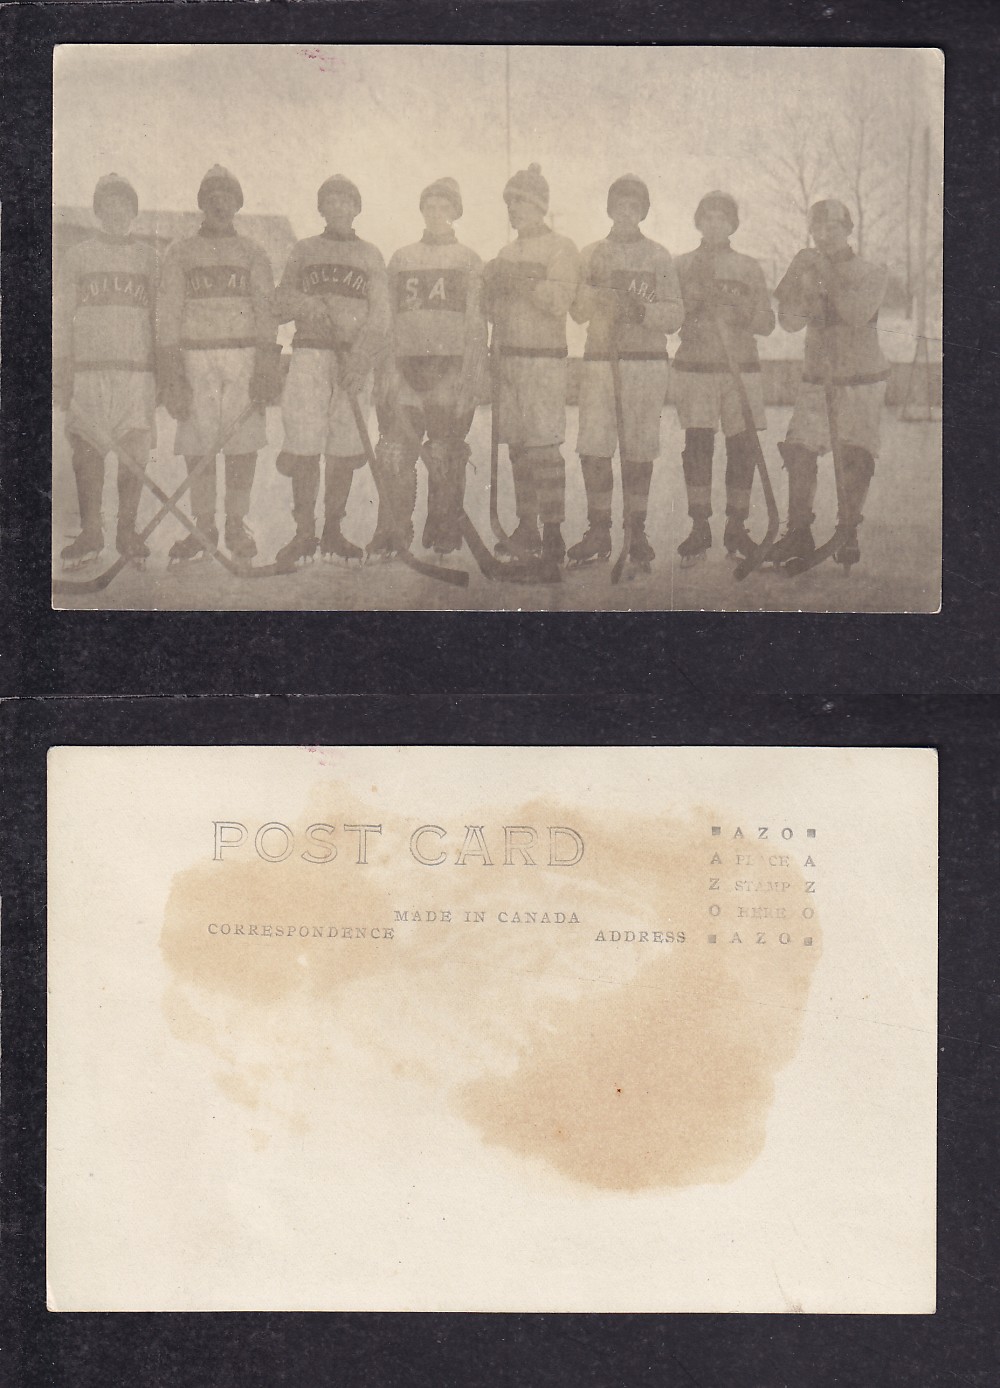 1900'S MONTREAL HOCKEY TEAM POST CARD photo